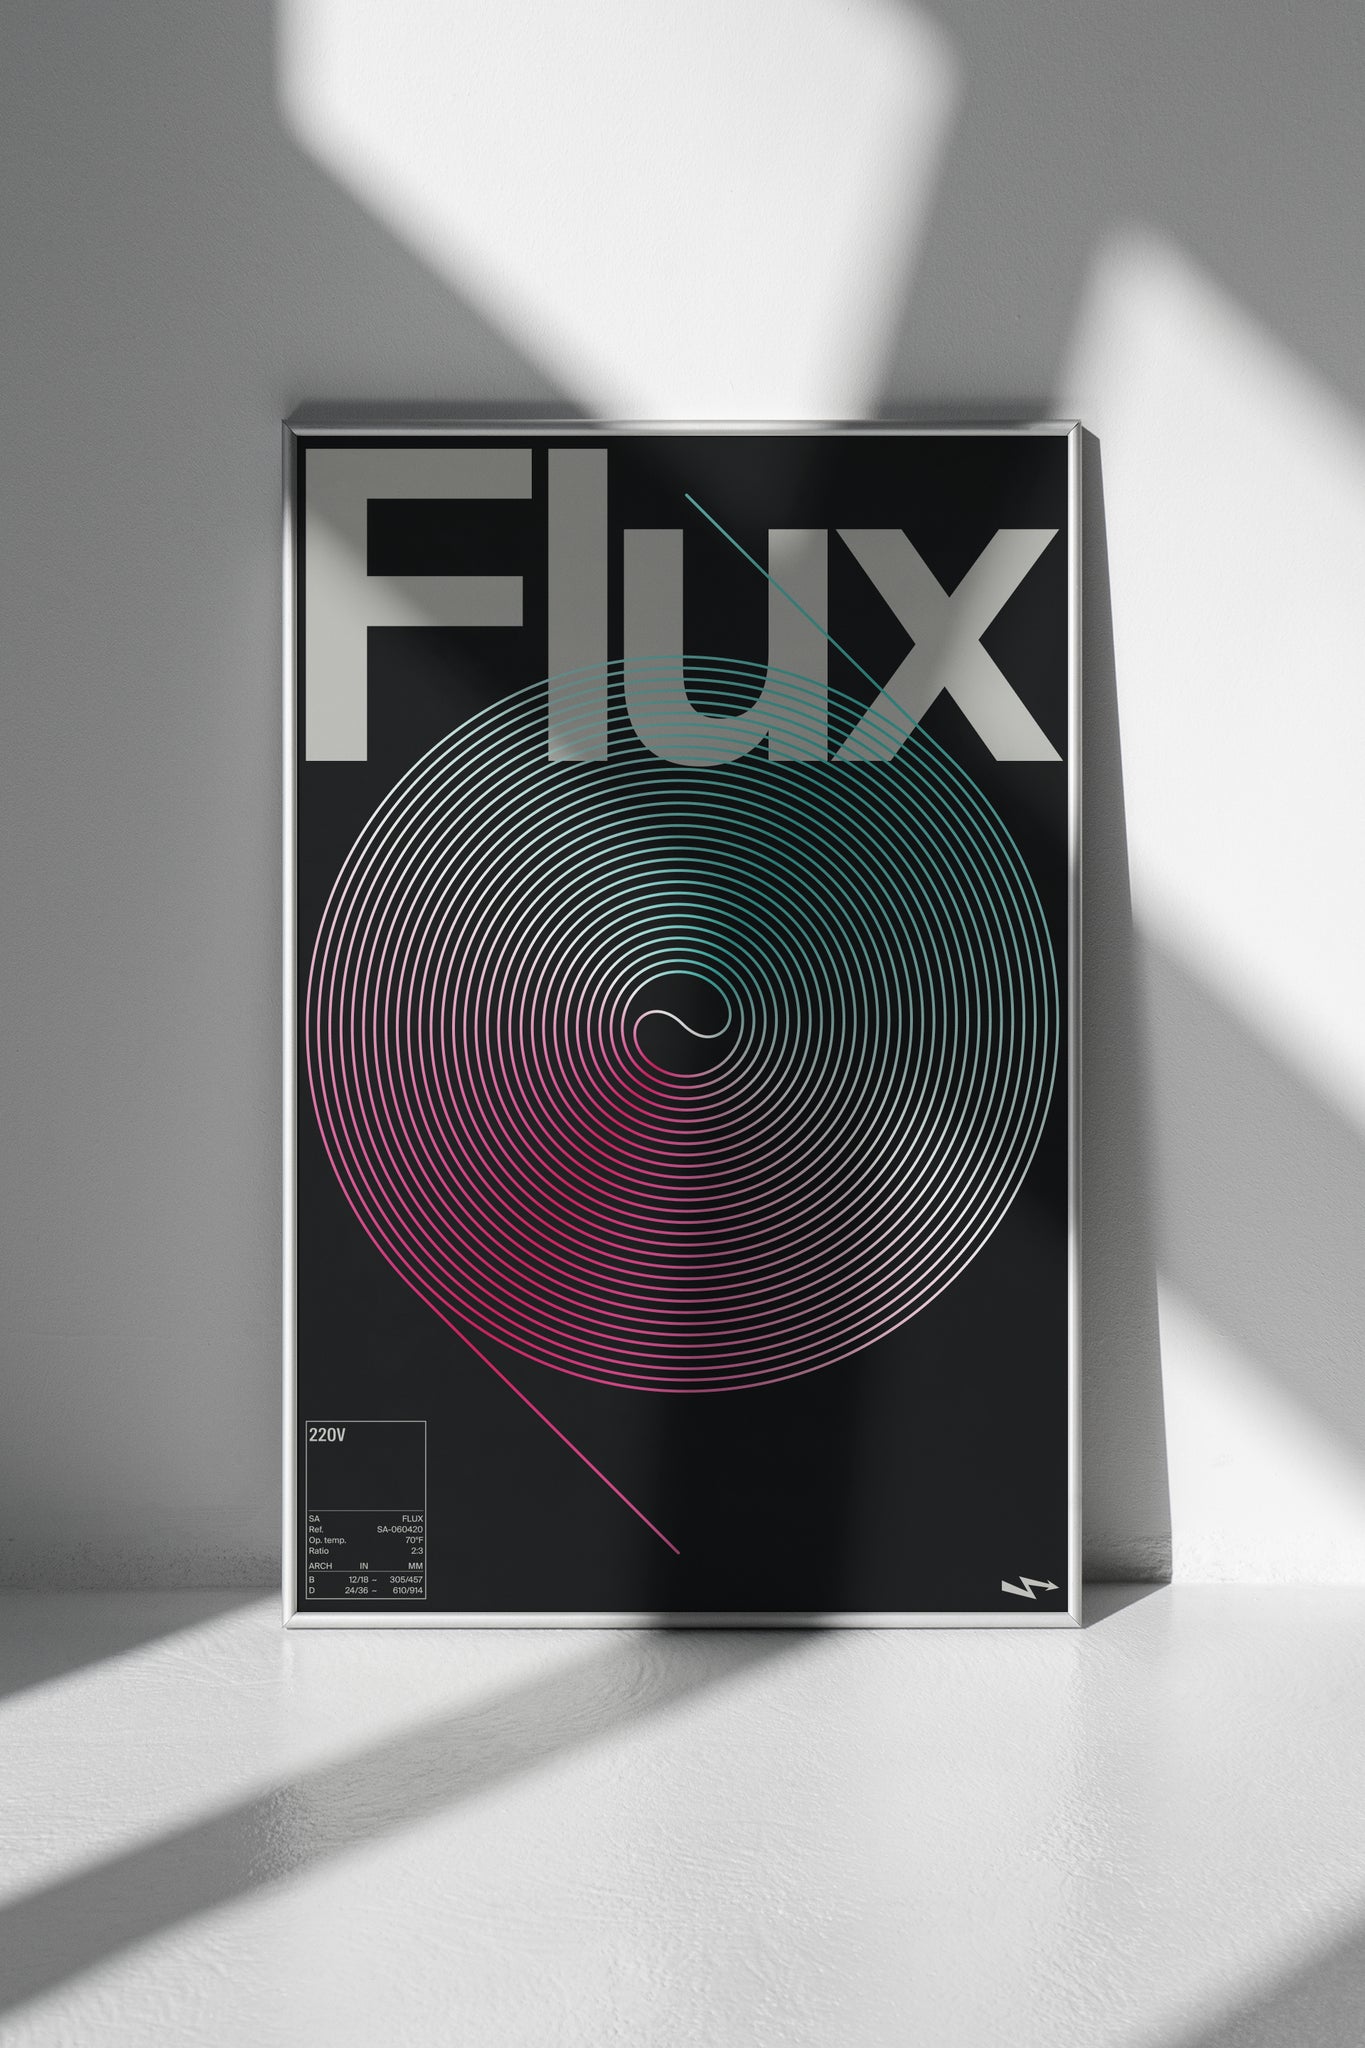 Flux poster by Xtian Miller via SIGNAL A